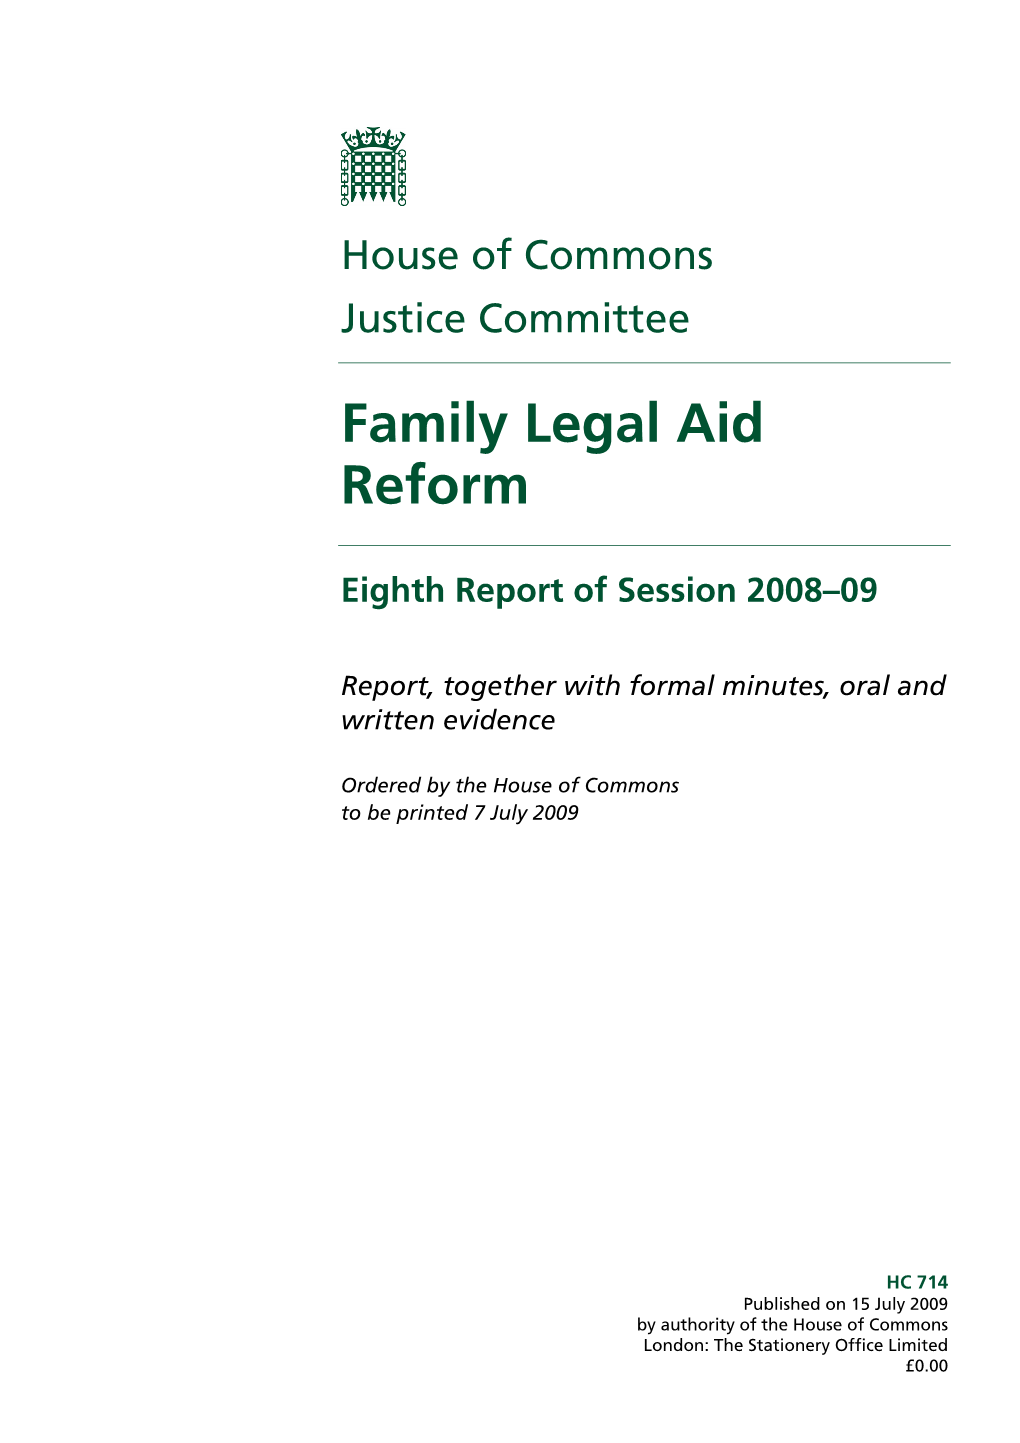 Family Legal Aid Reform